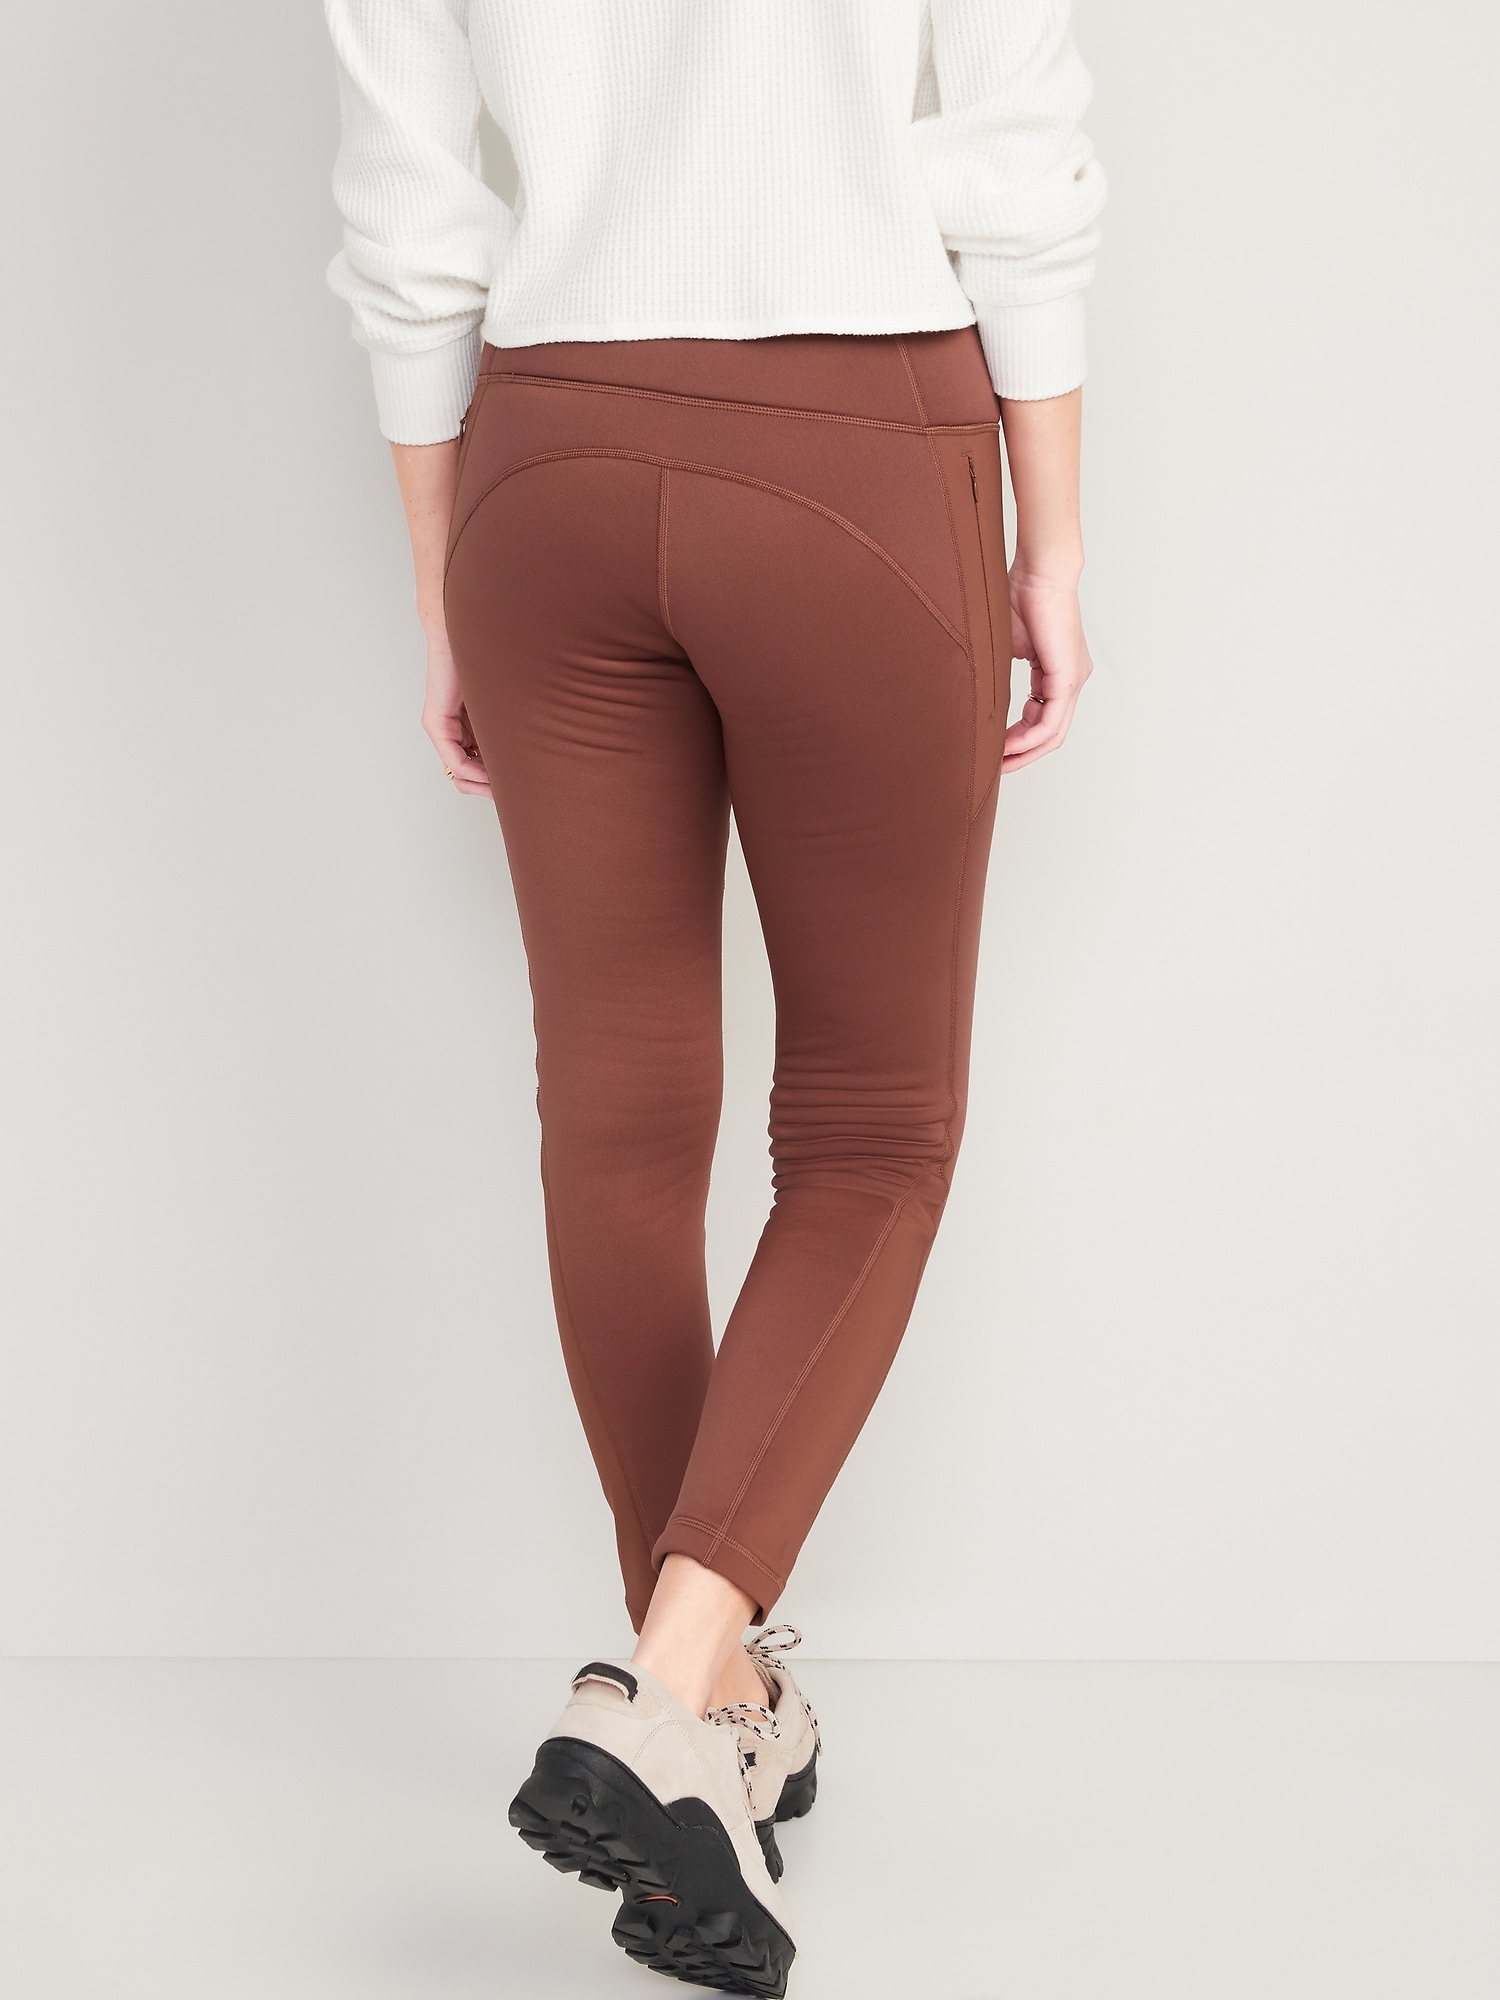 2 PC LOT! GIRL'S XL 14/16 Faded Glory Pink Pants & Old Navy Gray Warm  Leggings | eBay